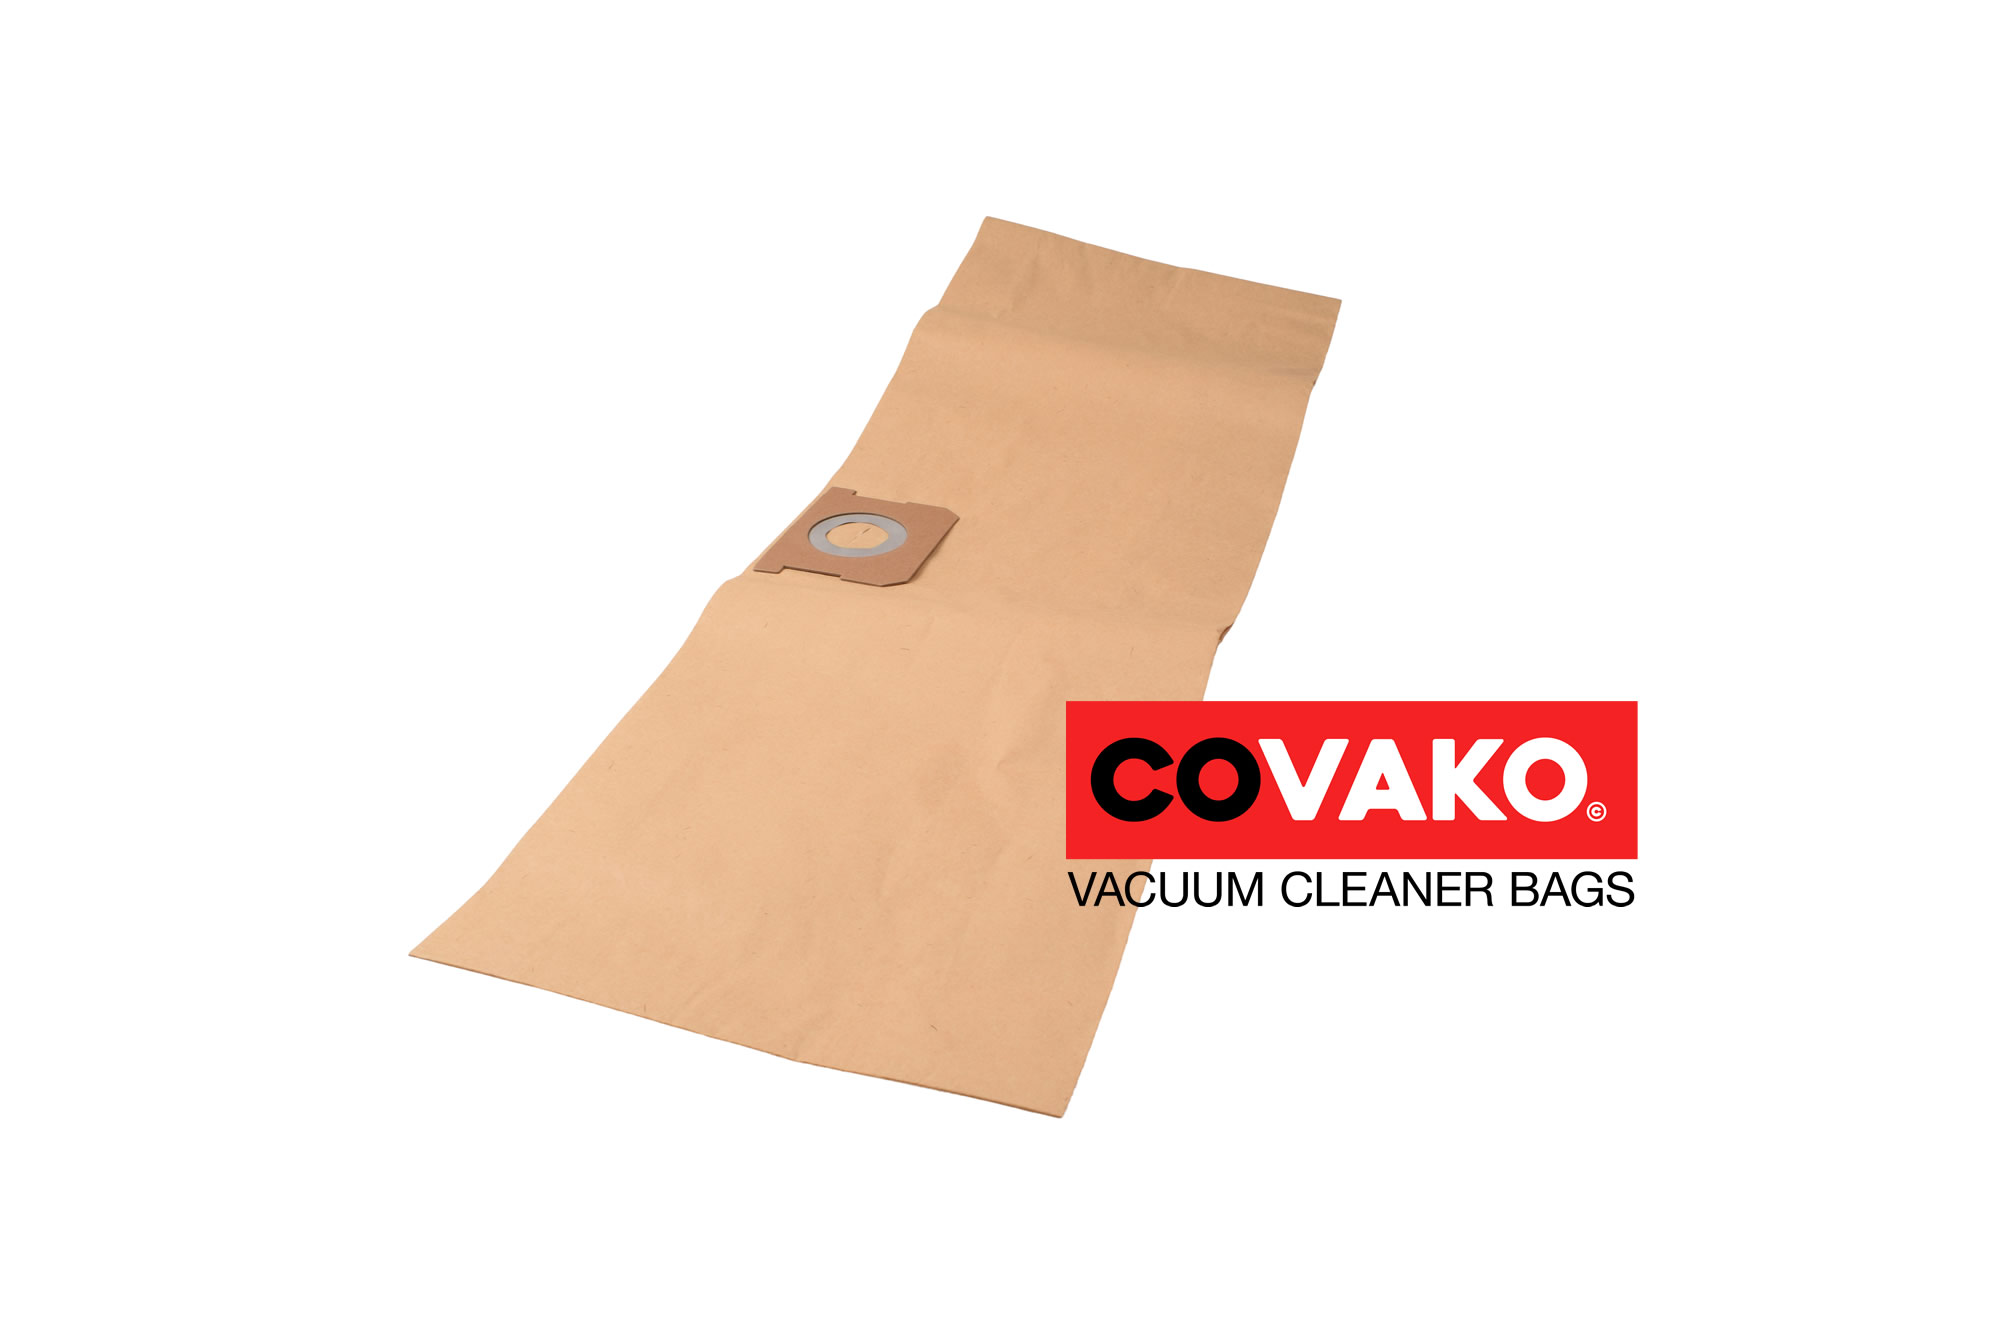 Obi NTS 25/1500 / Paper - Obi vacuum cleaner bags